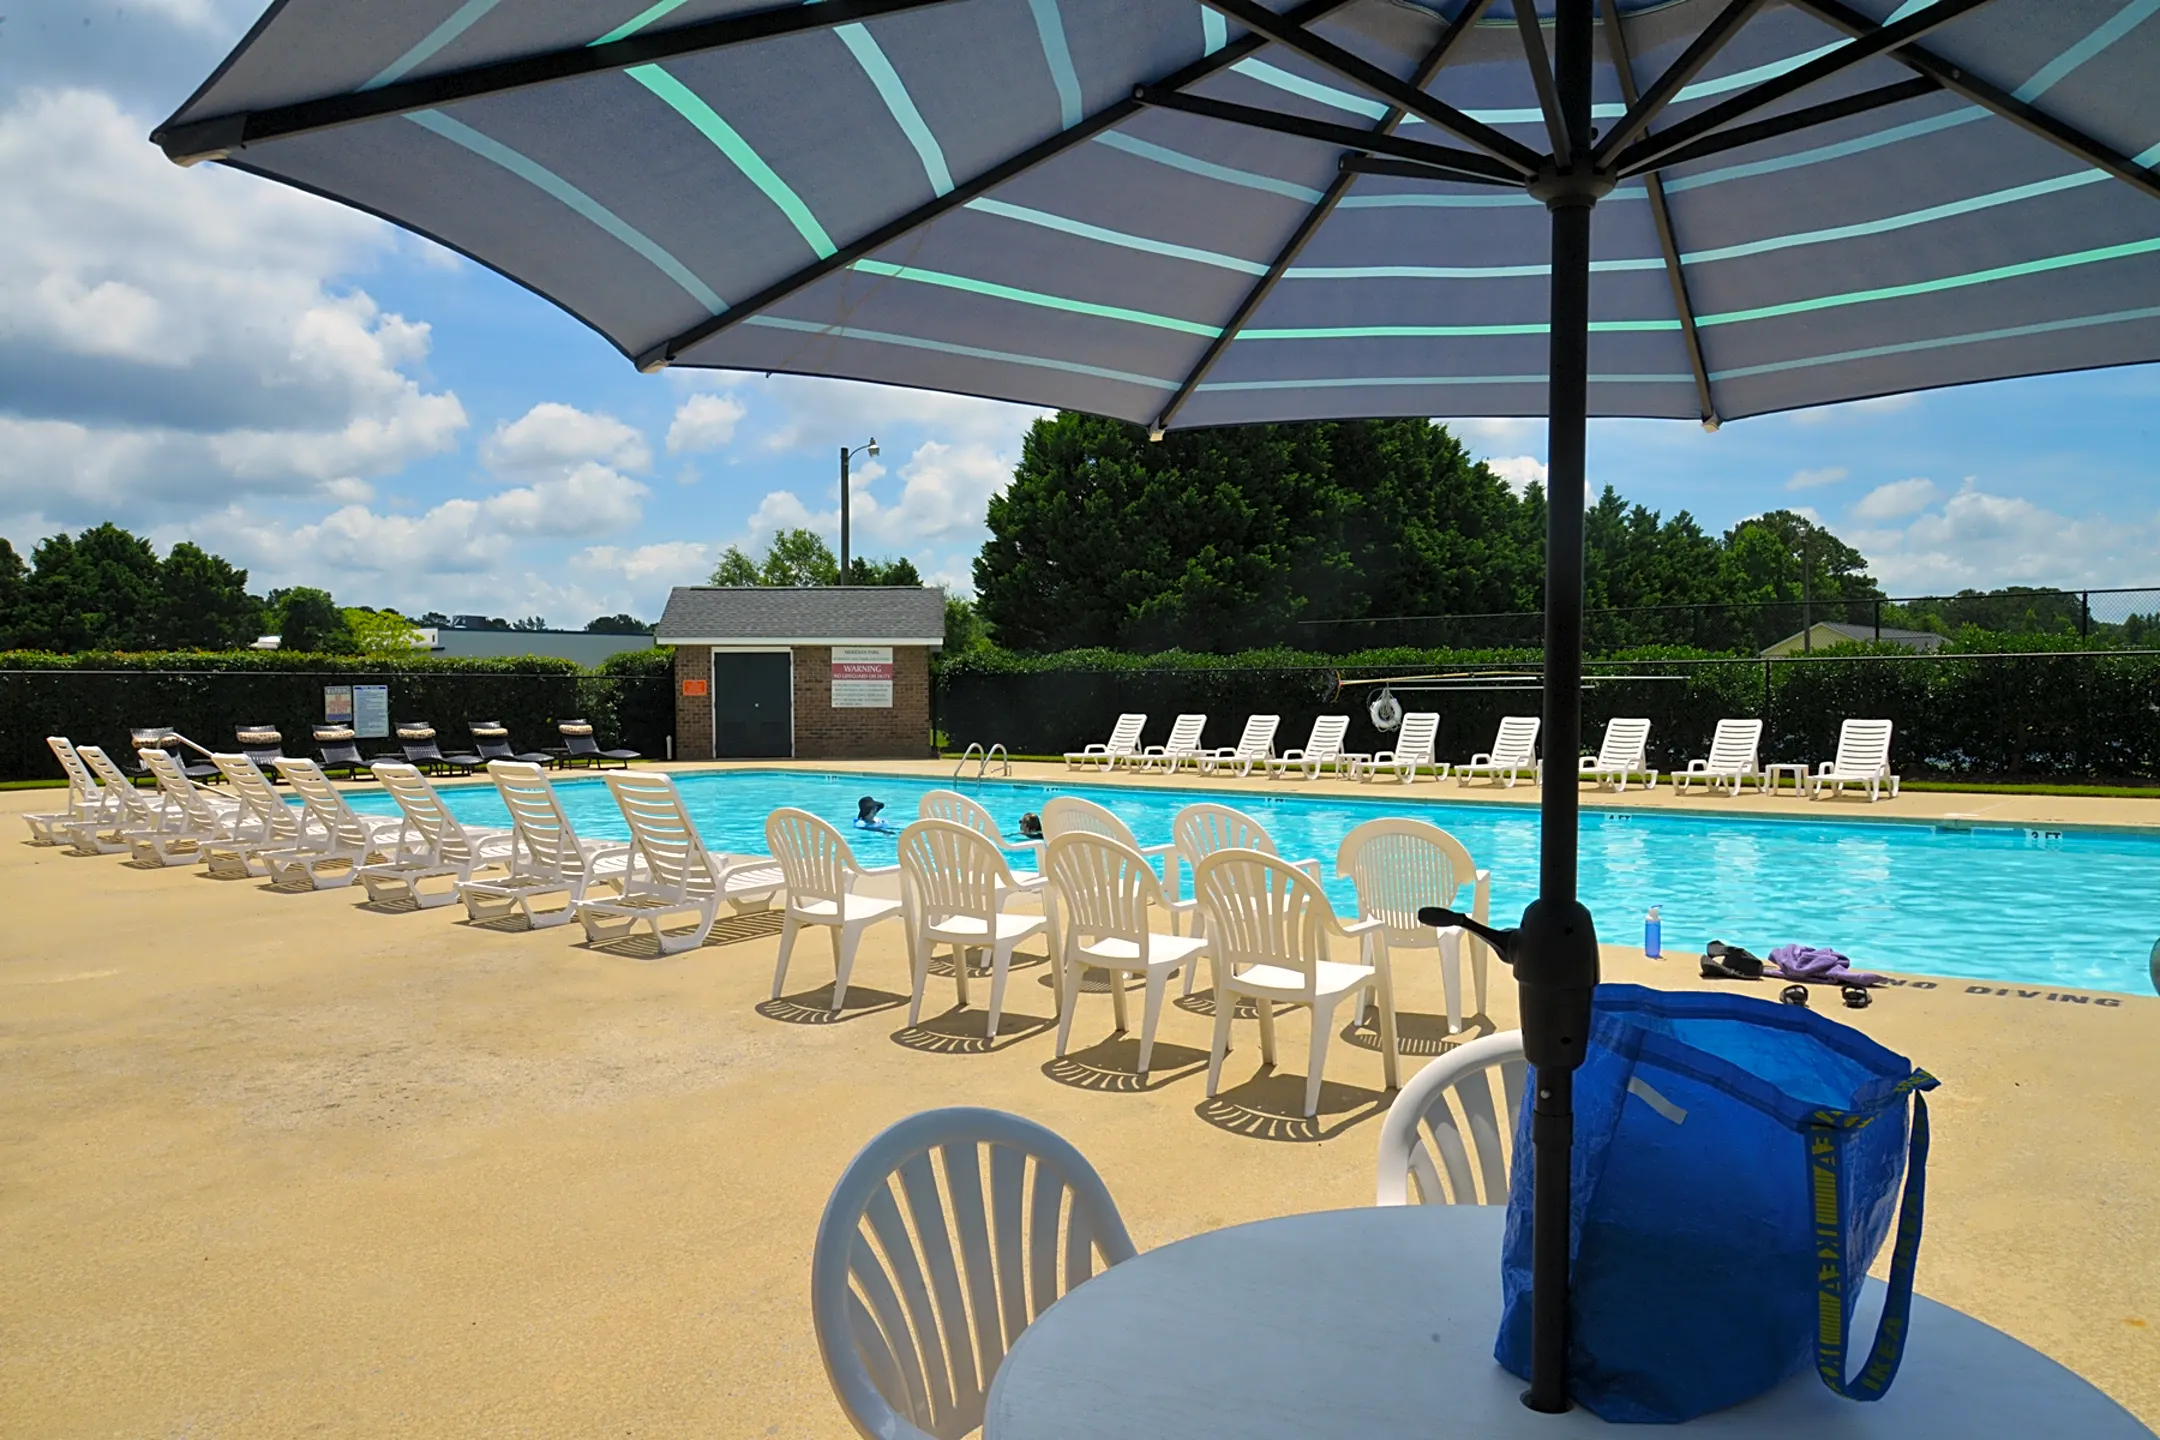 Pool - Meridian Park Apartments - Greenville, NC